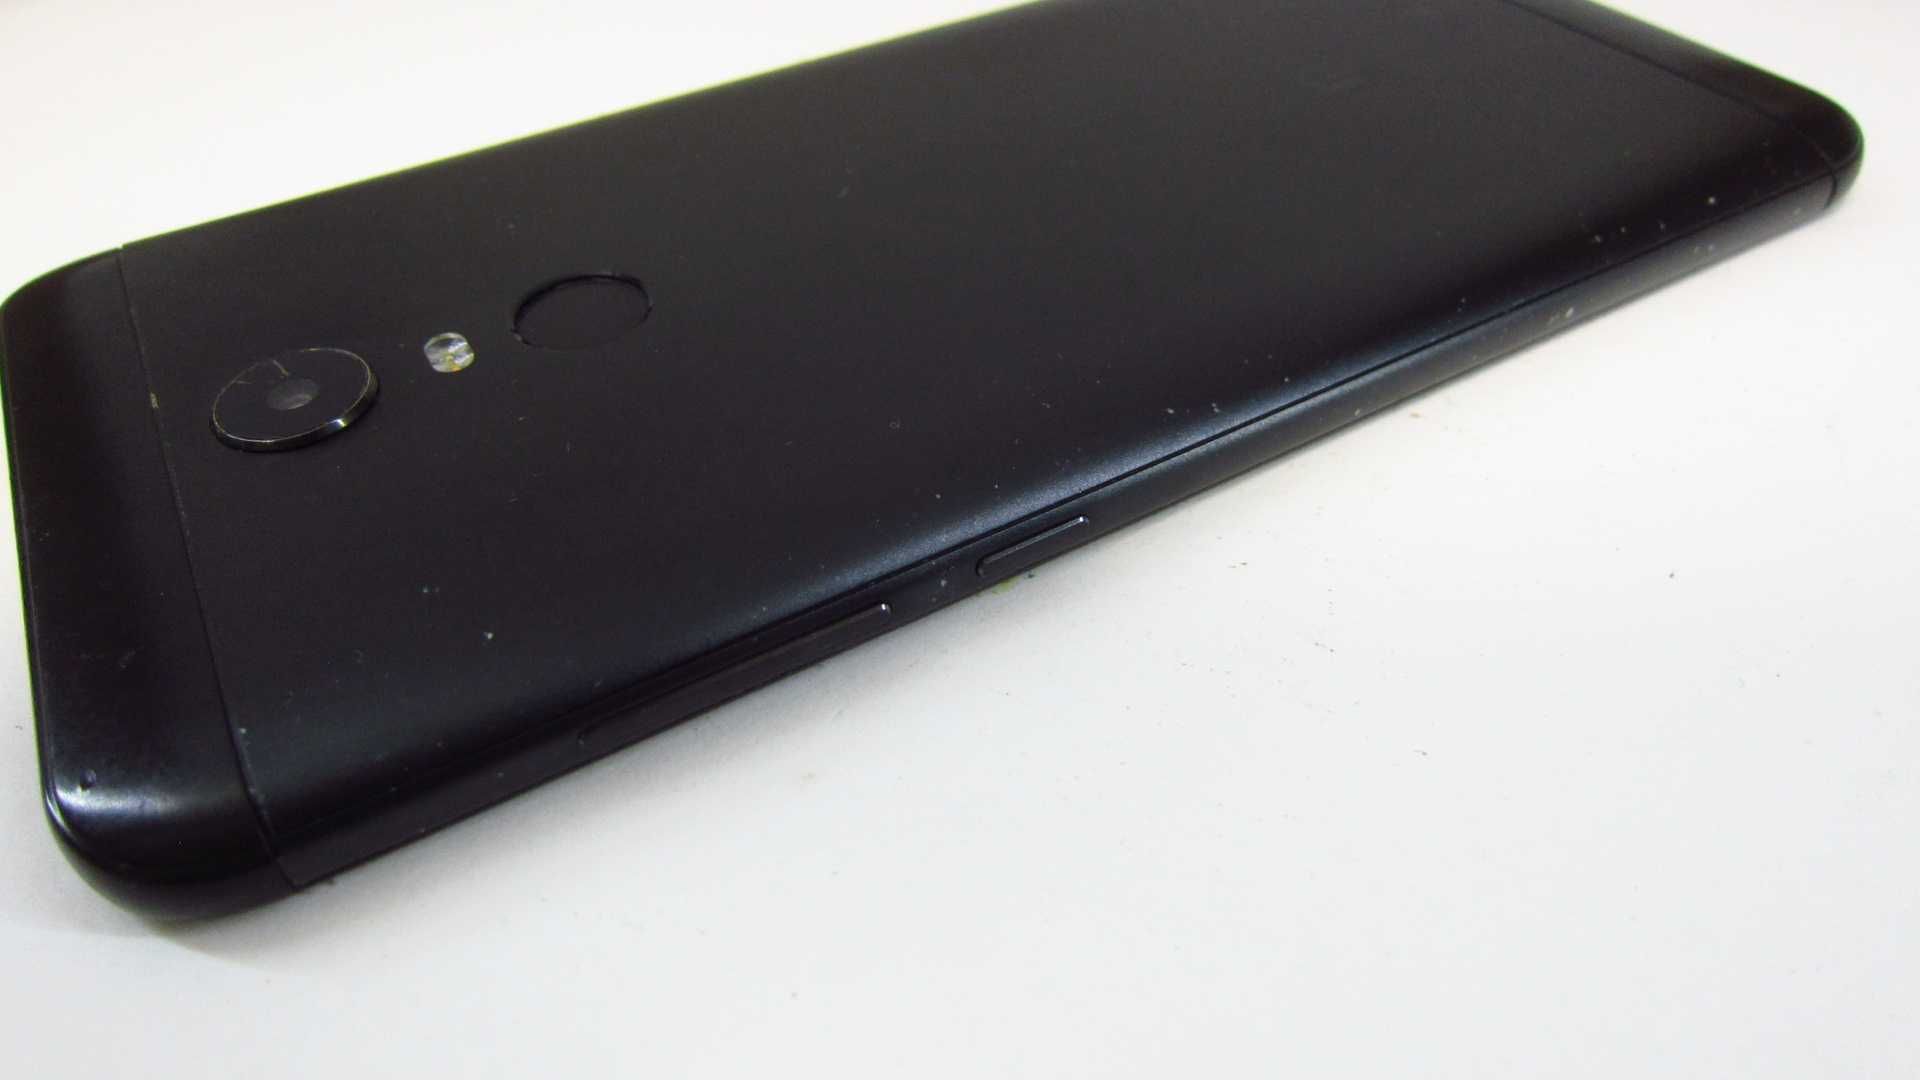 Xiaomi Redmi 5 Plus 4/64GB Black